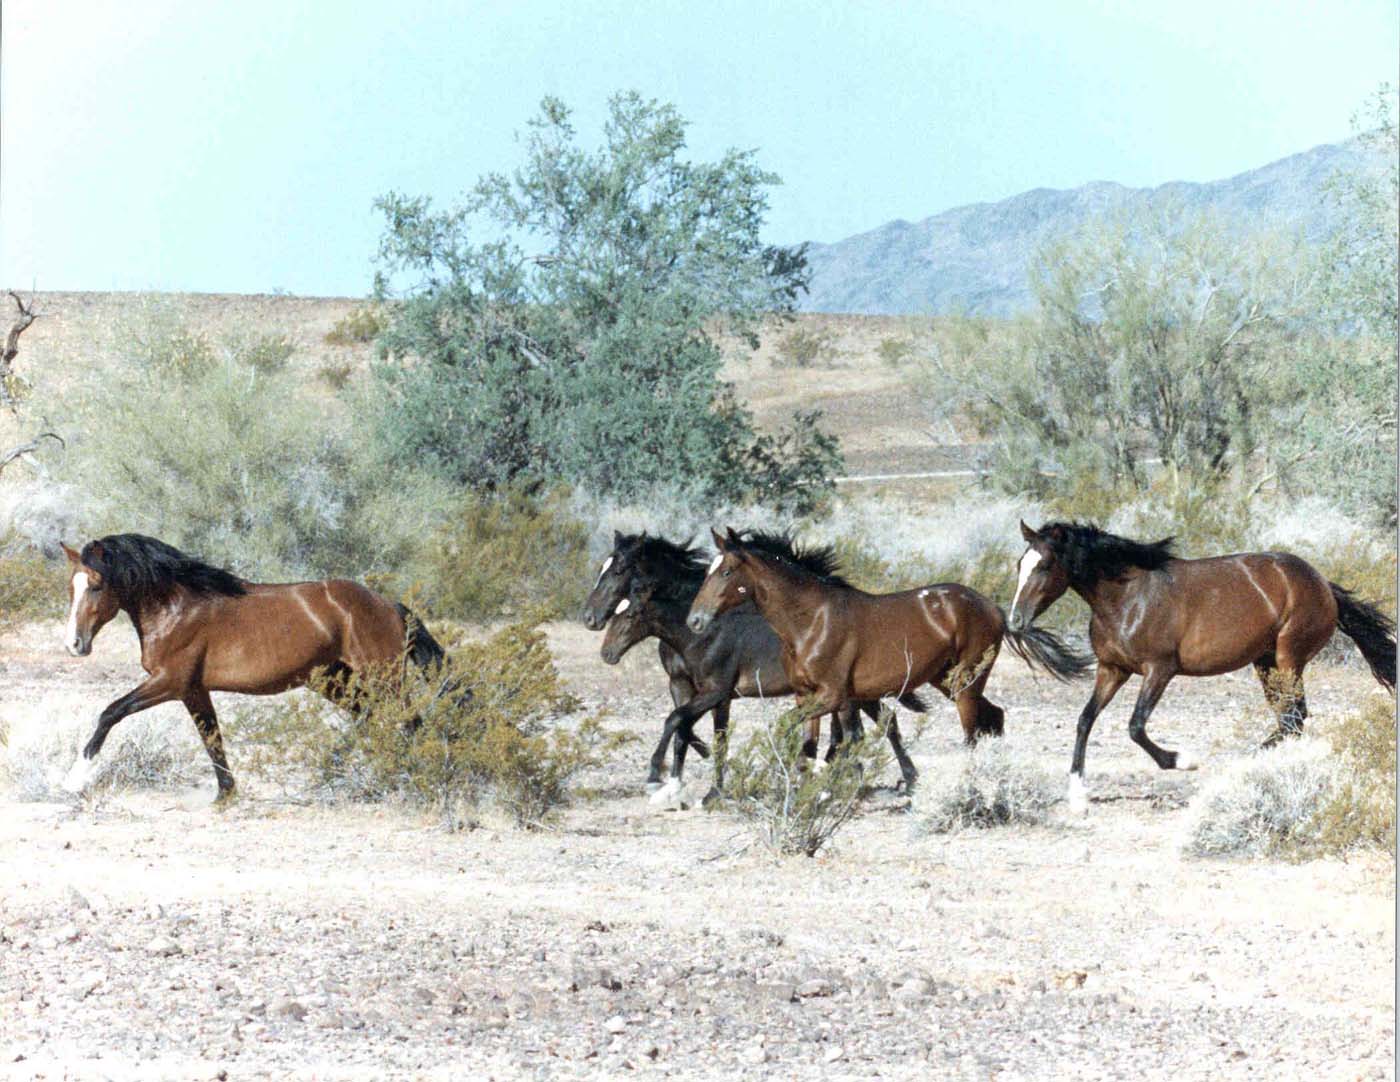 Wild horses running through the desert.